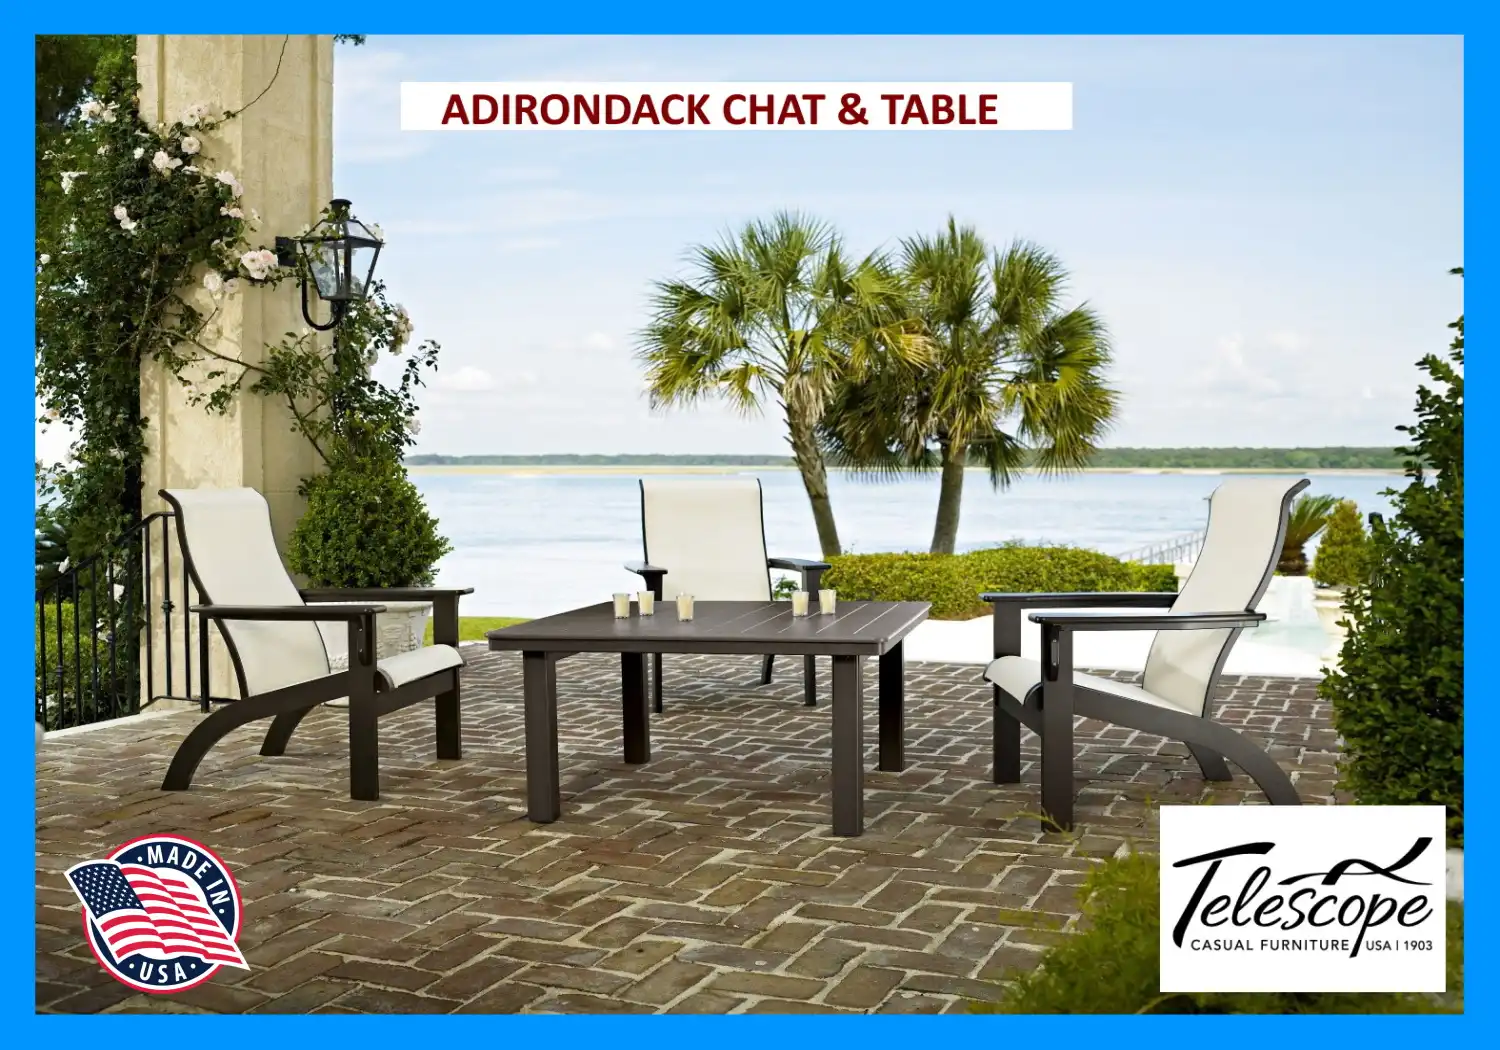 ADIRONDACK CHAT & TABLE